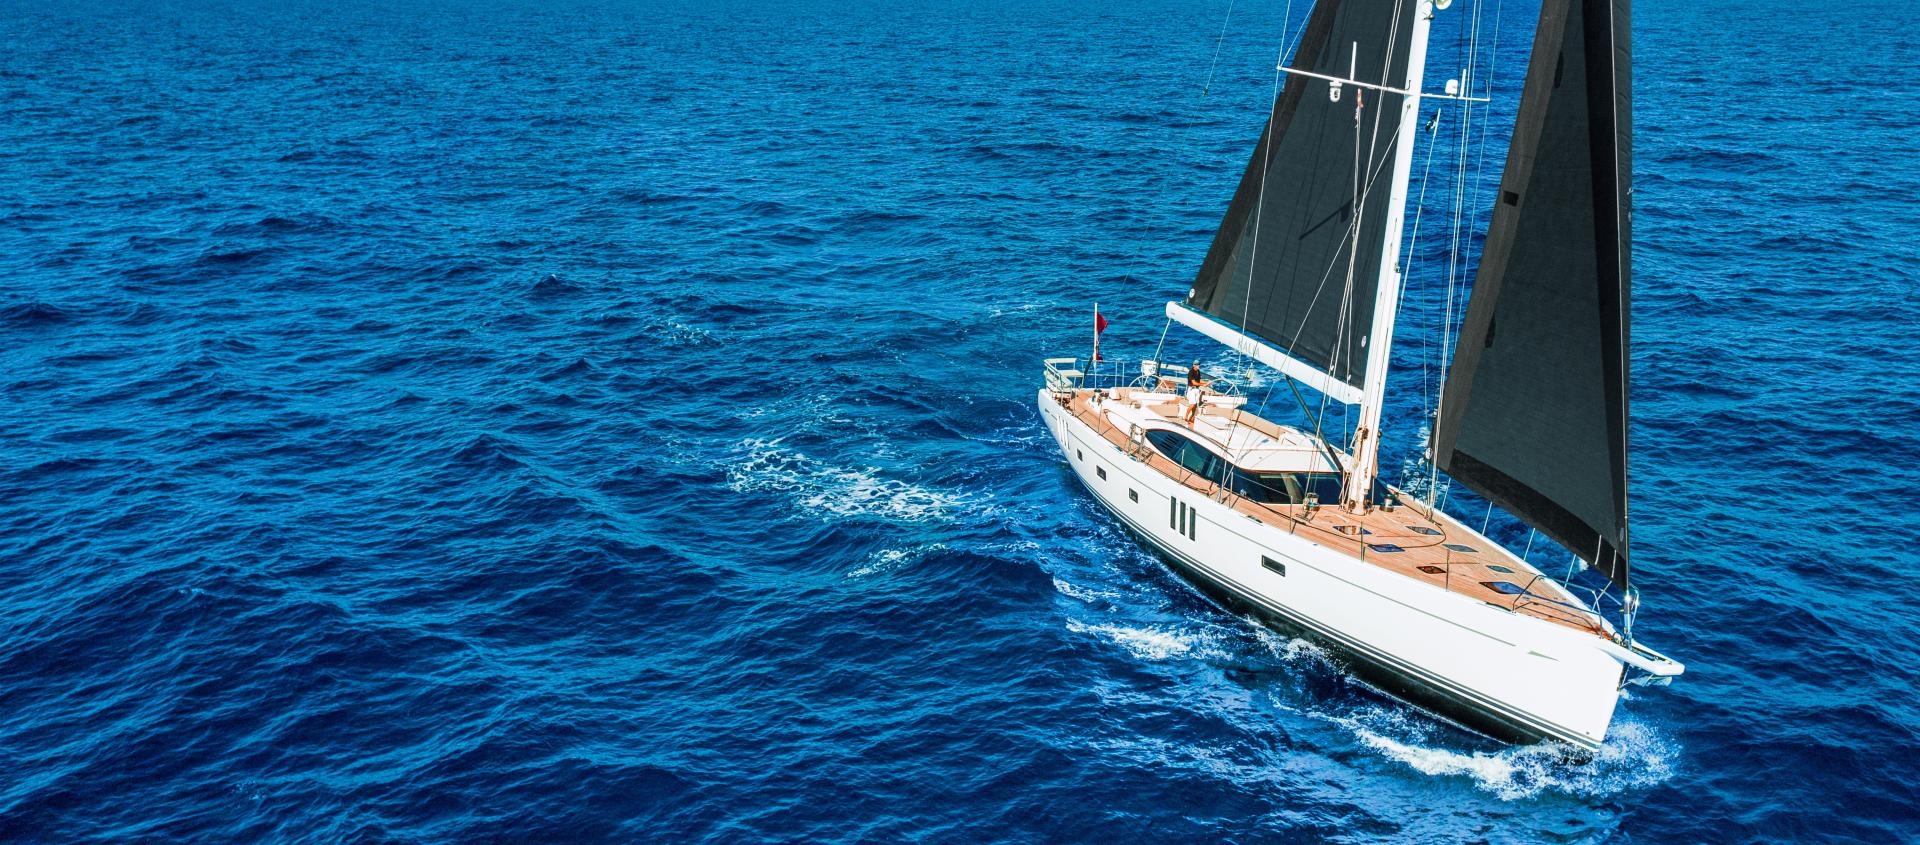 luxury bluewater sailing yacht sailing at sea